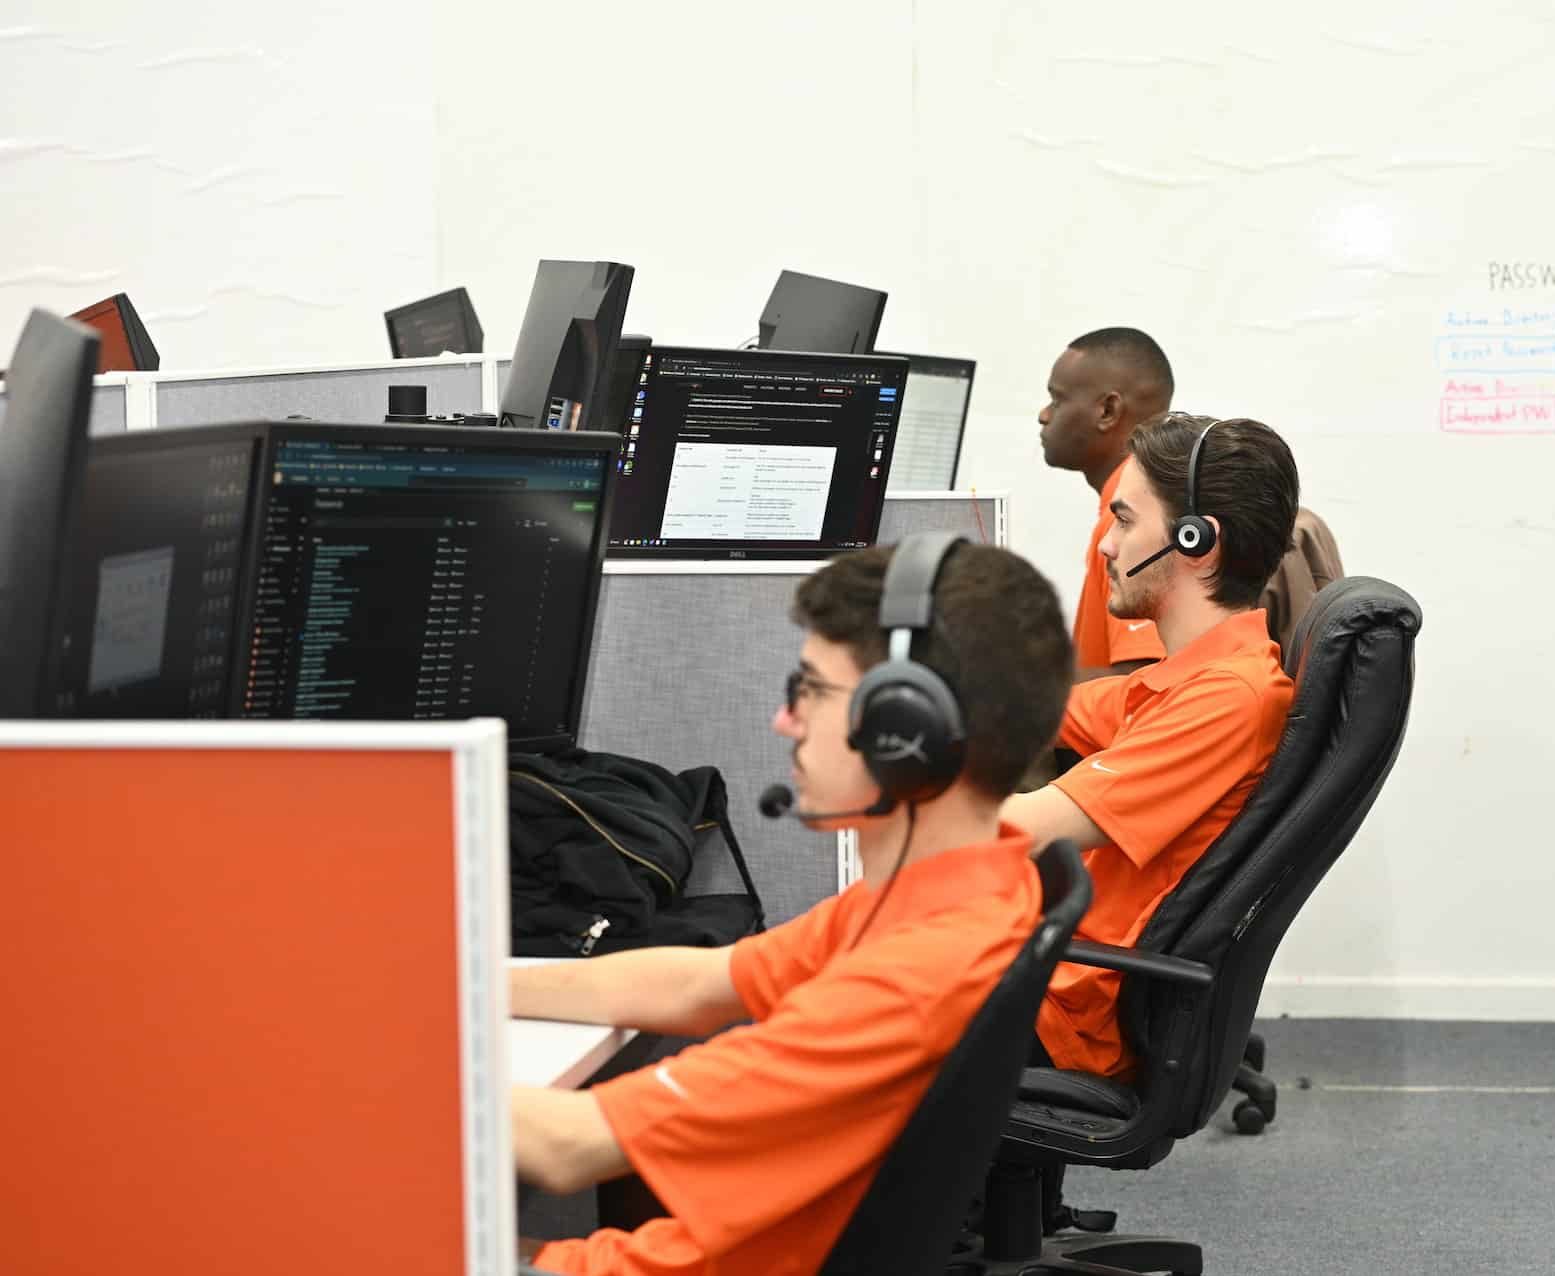 three men in orange shirts sitting at computers